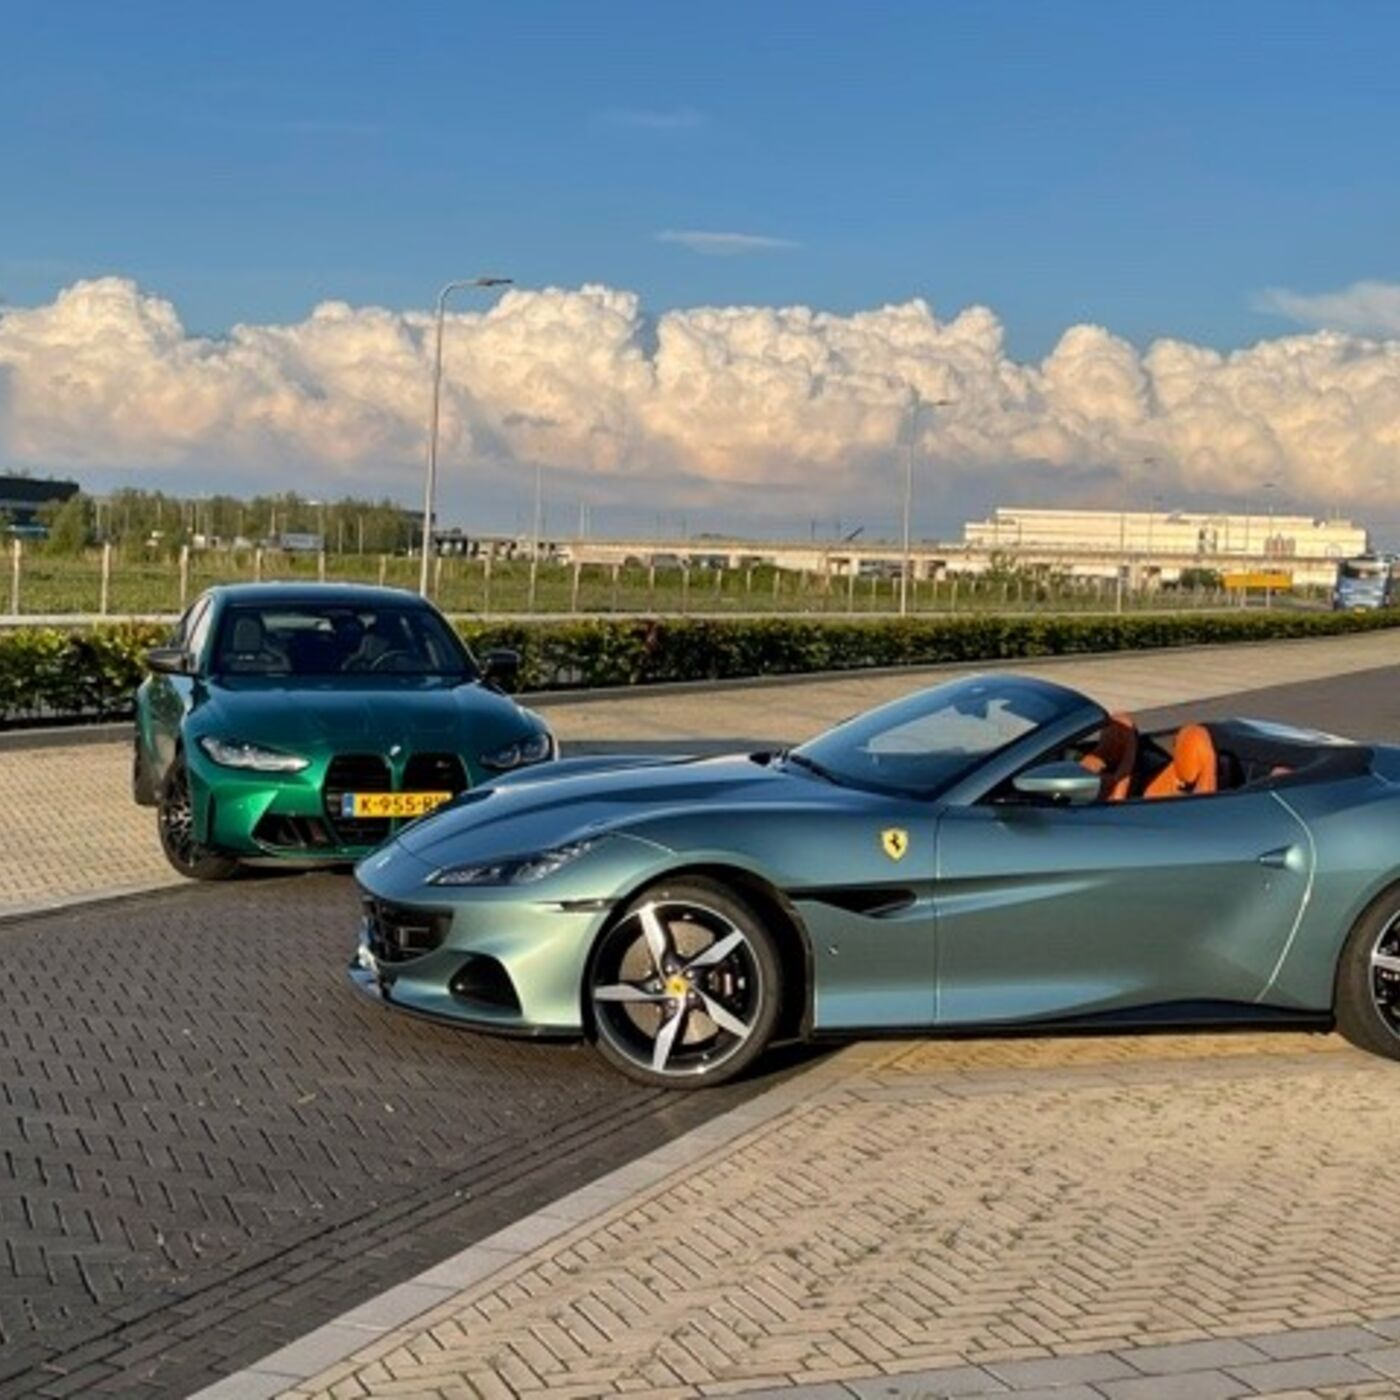 Aflevering 36 - De Ferrari Portofino M & de BMW M3